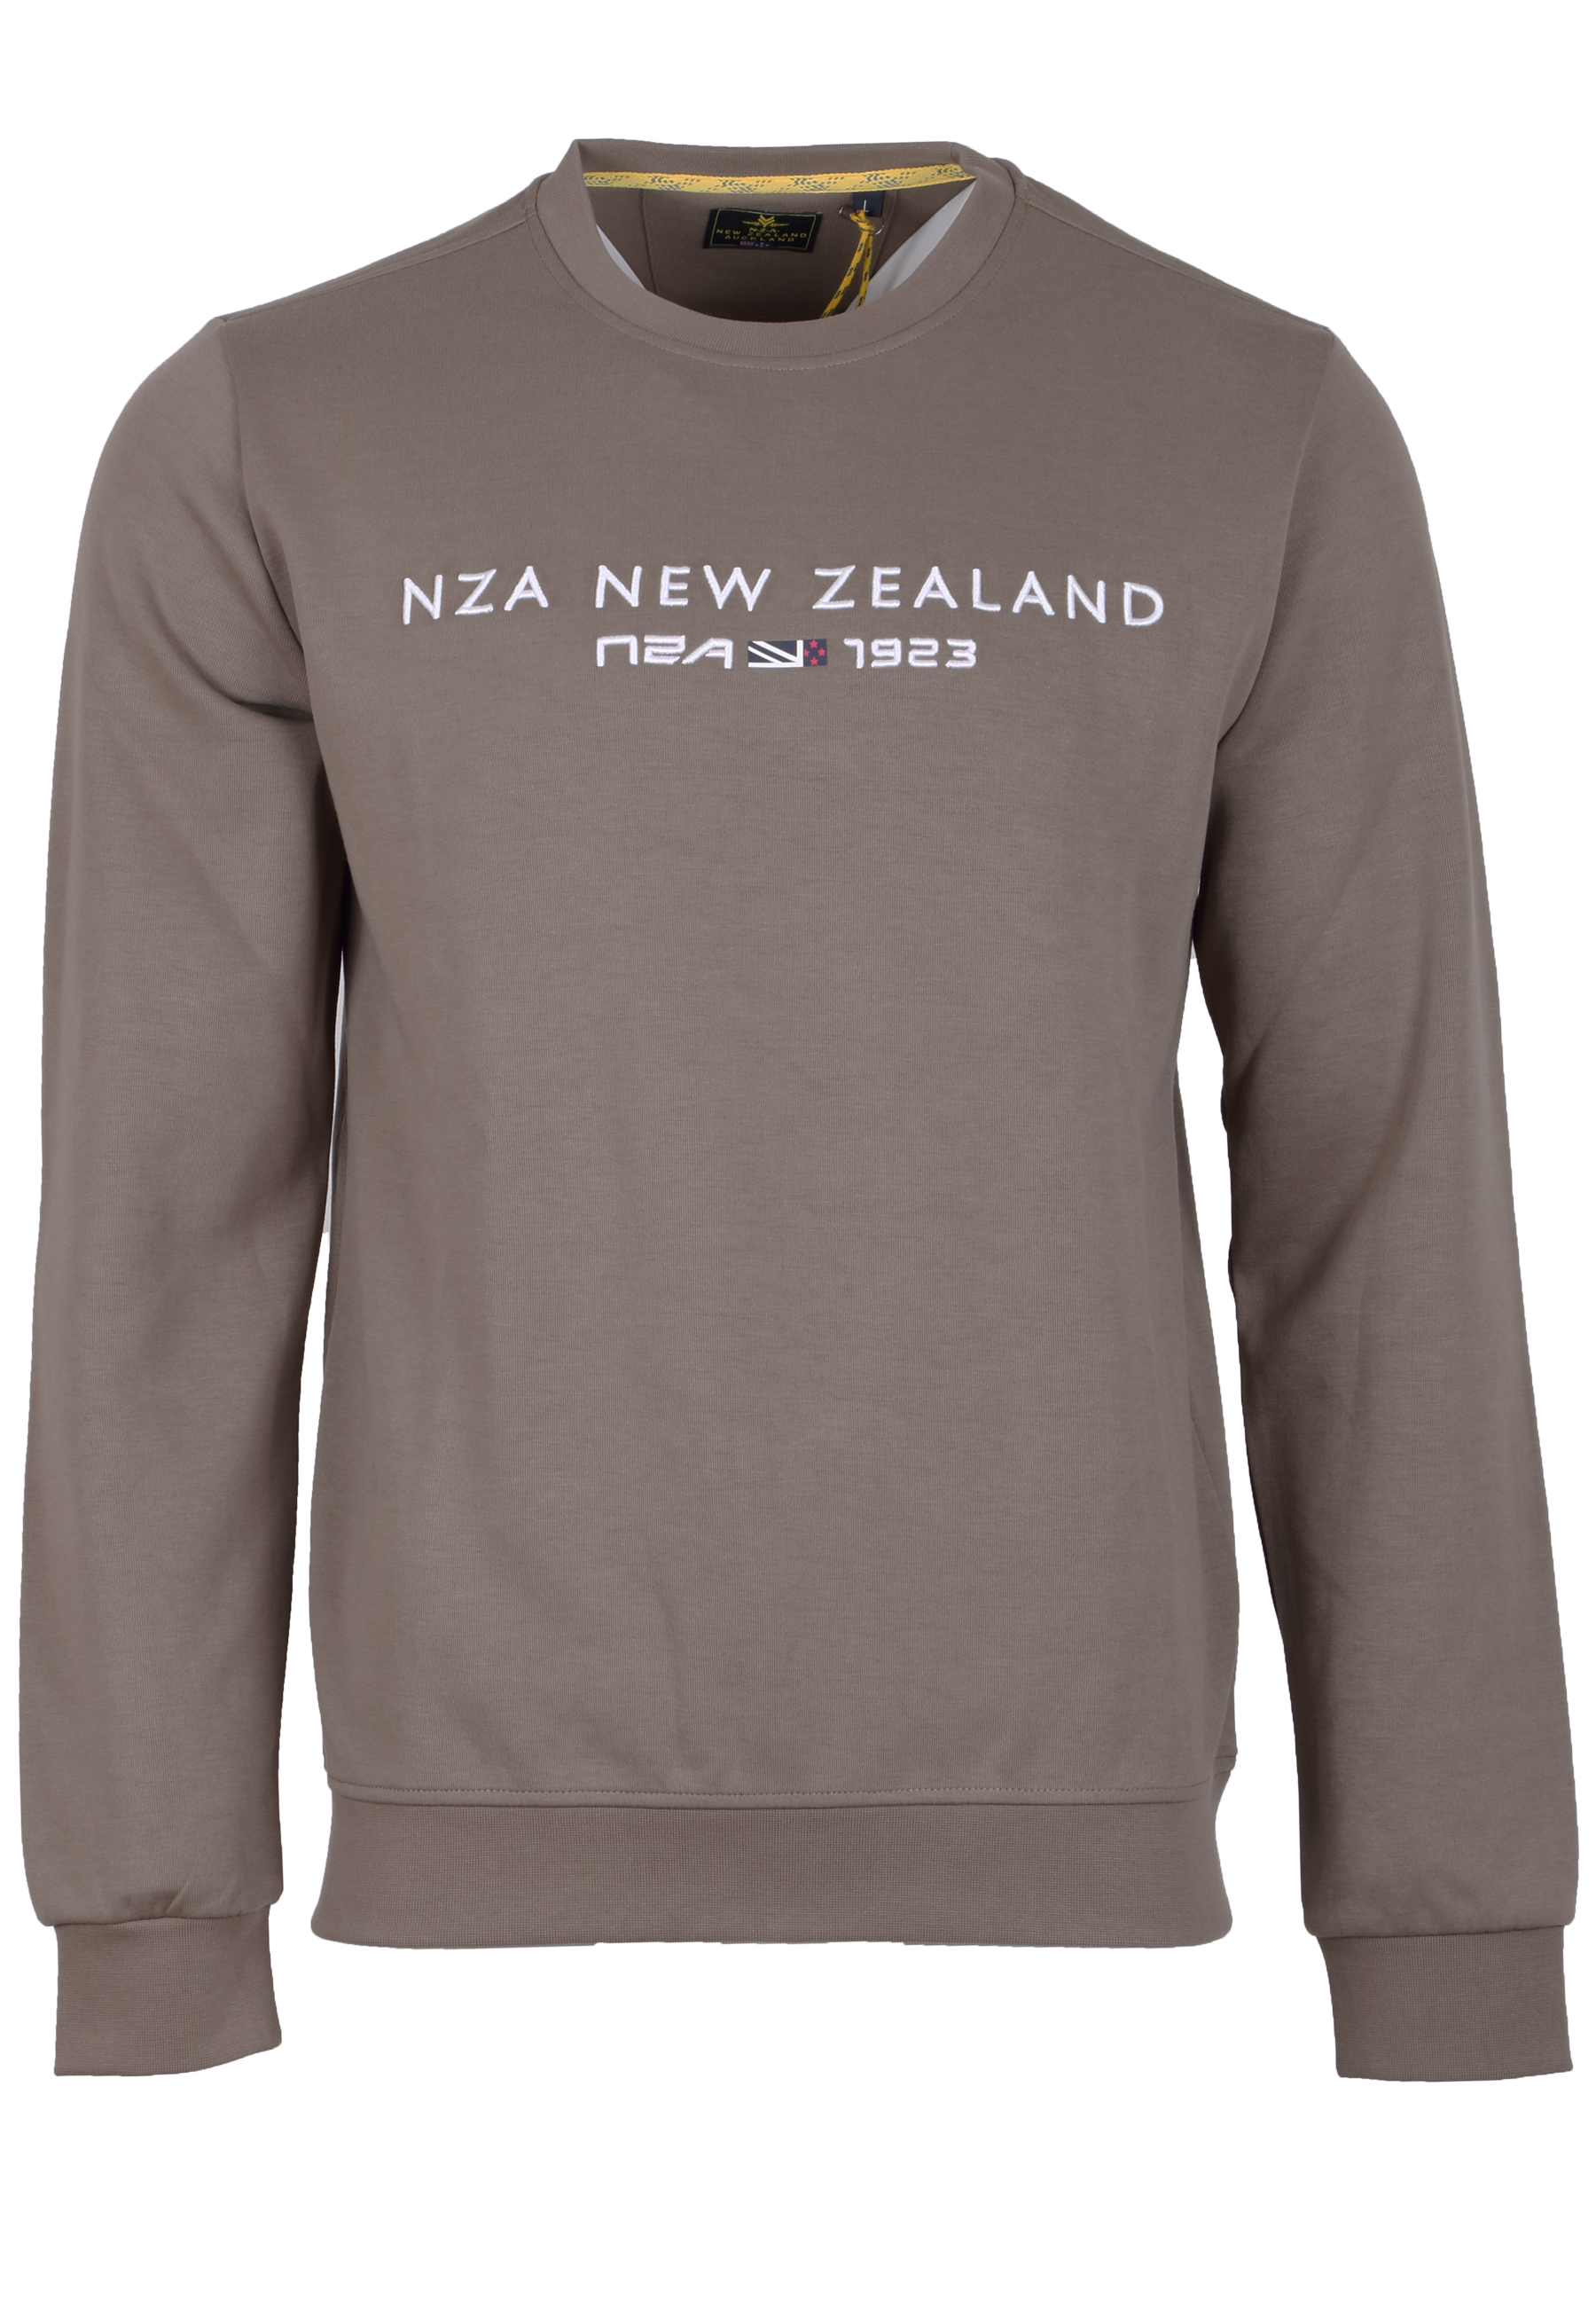 NZA New Zealand Auckland Sweatshirt - army ground L